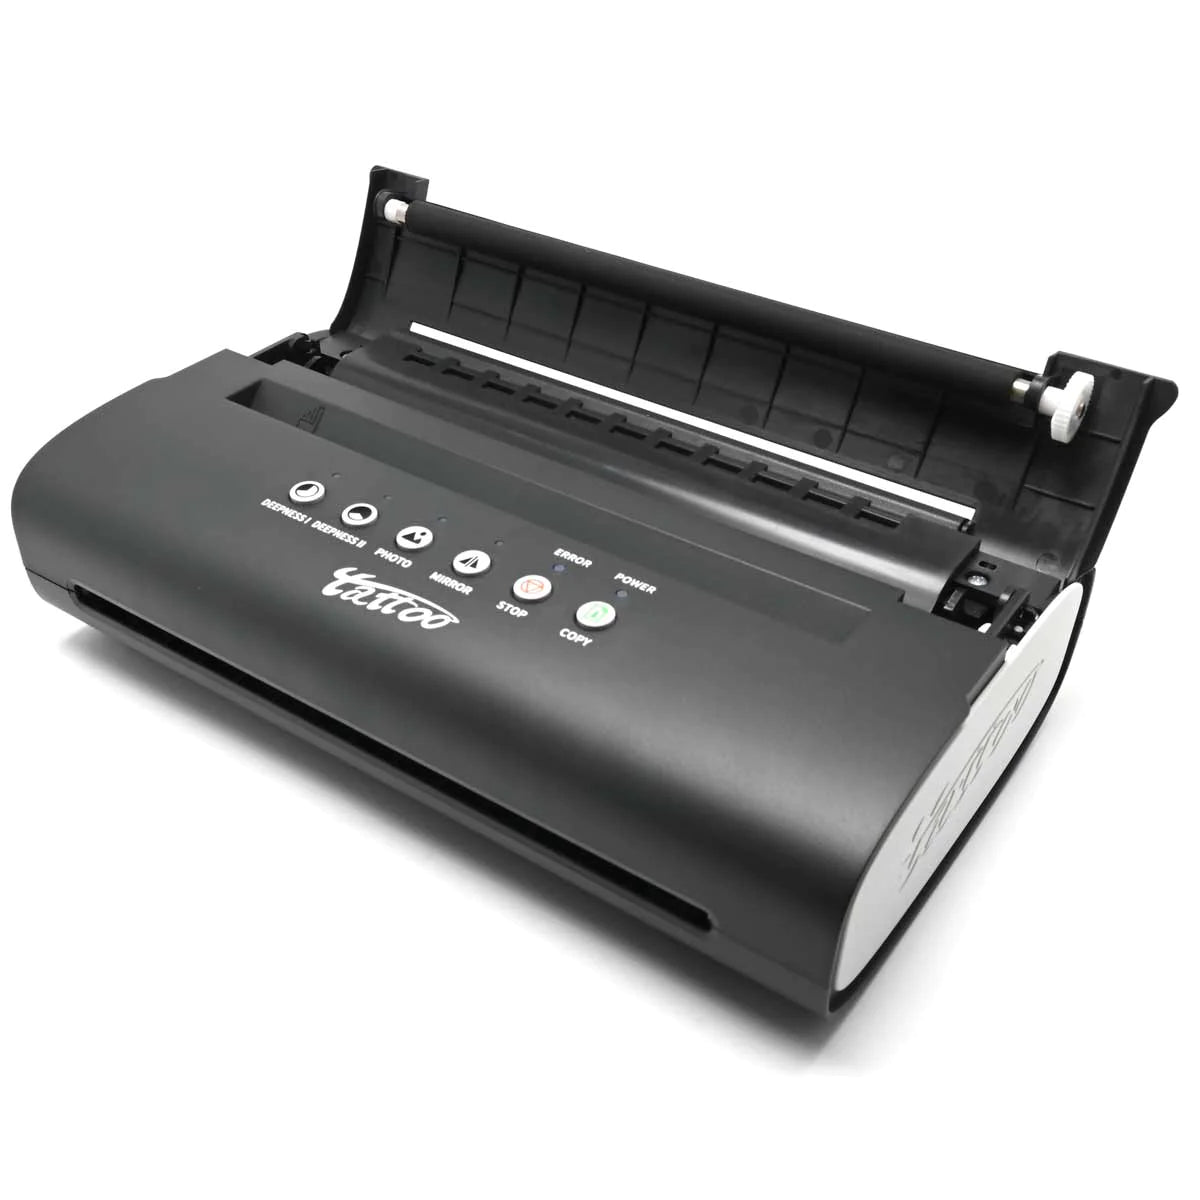 Thermal Stencil Printer - MT200